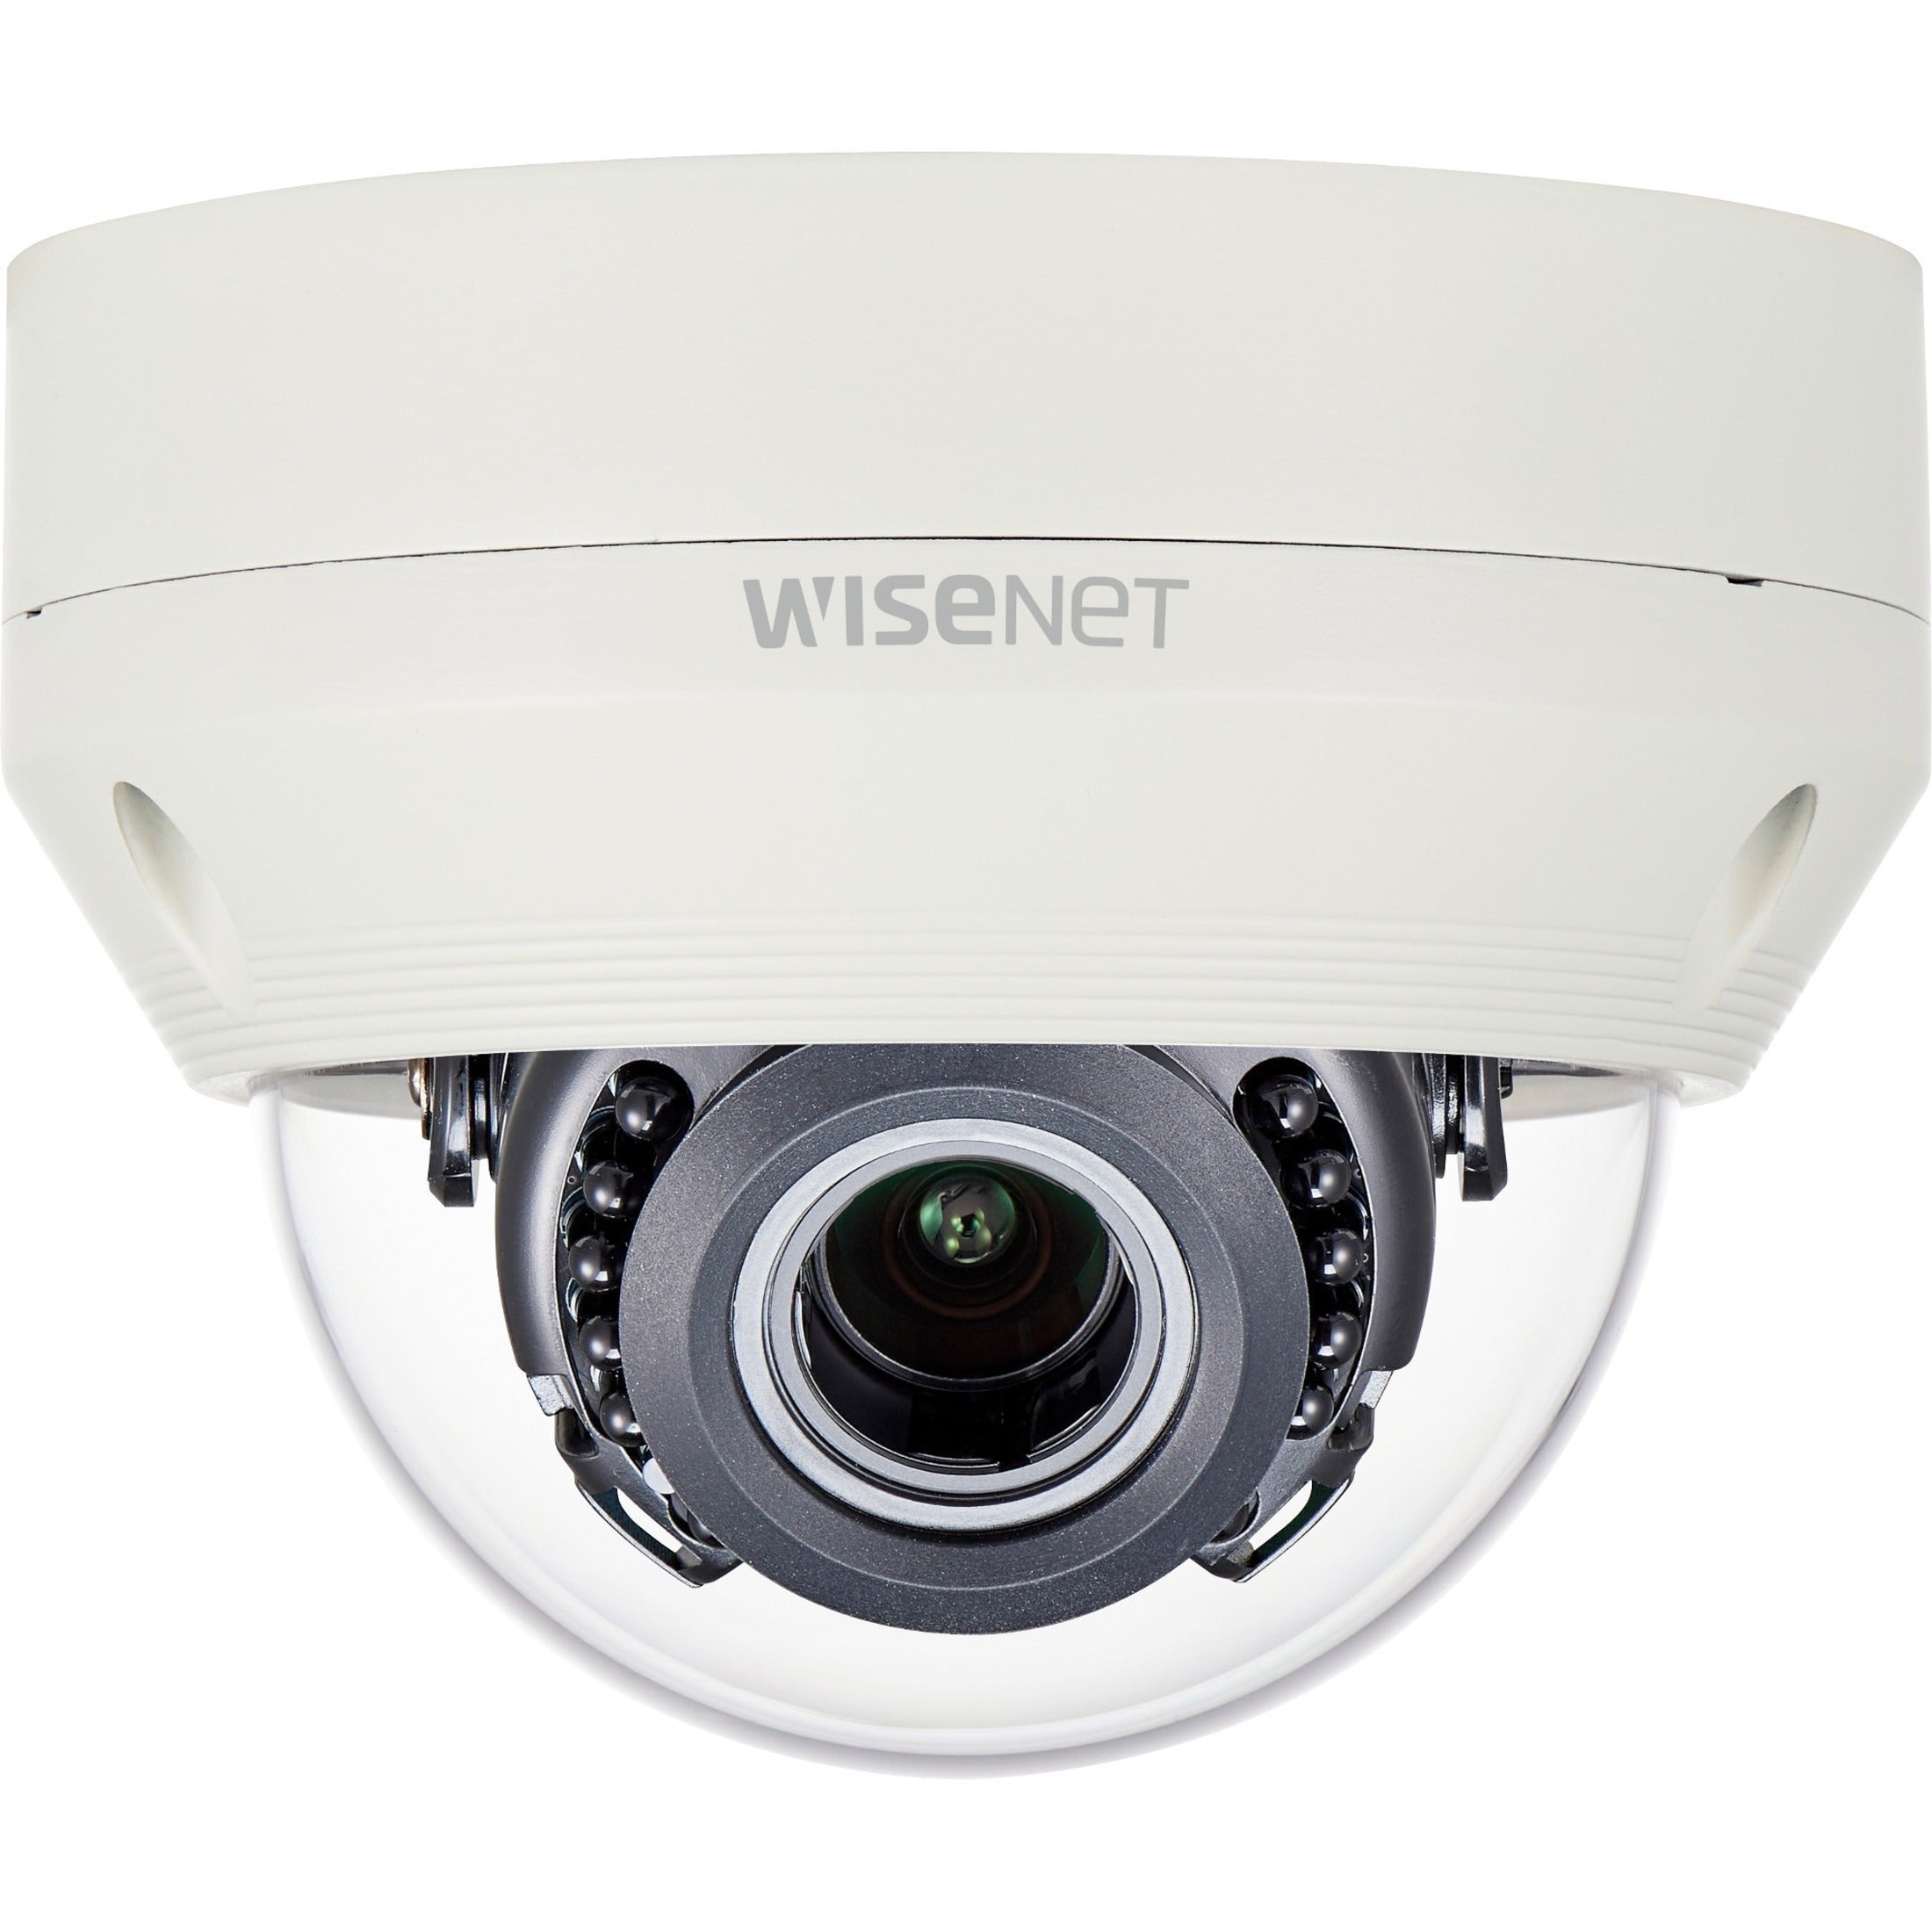 Wisenet HCV-6070R 2MP Analog HD IR Outdoor Dome Surveillance Camera, Full HD Night Vision, Vandal Resistant